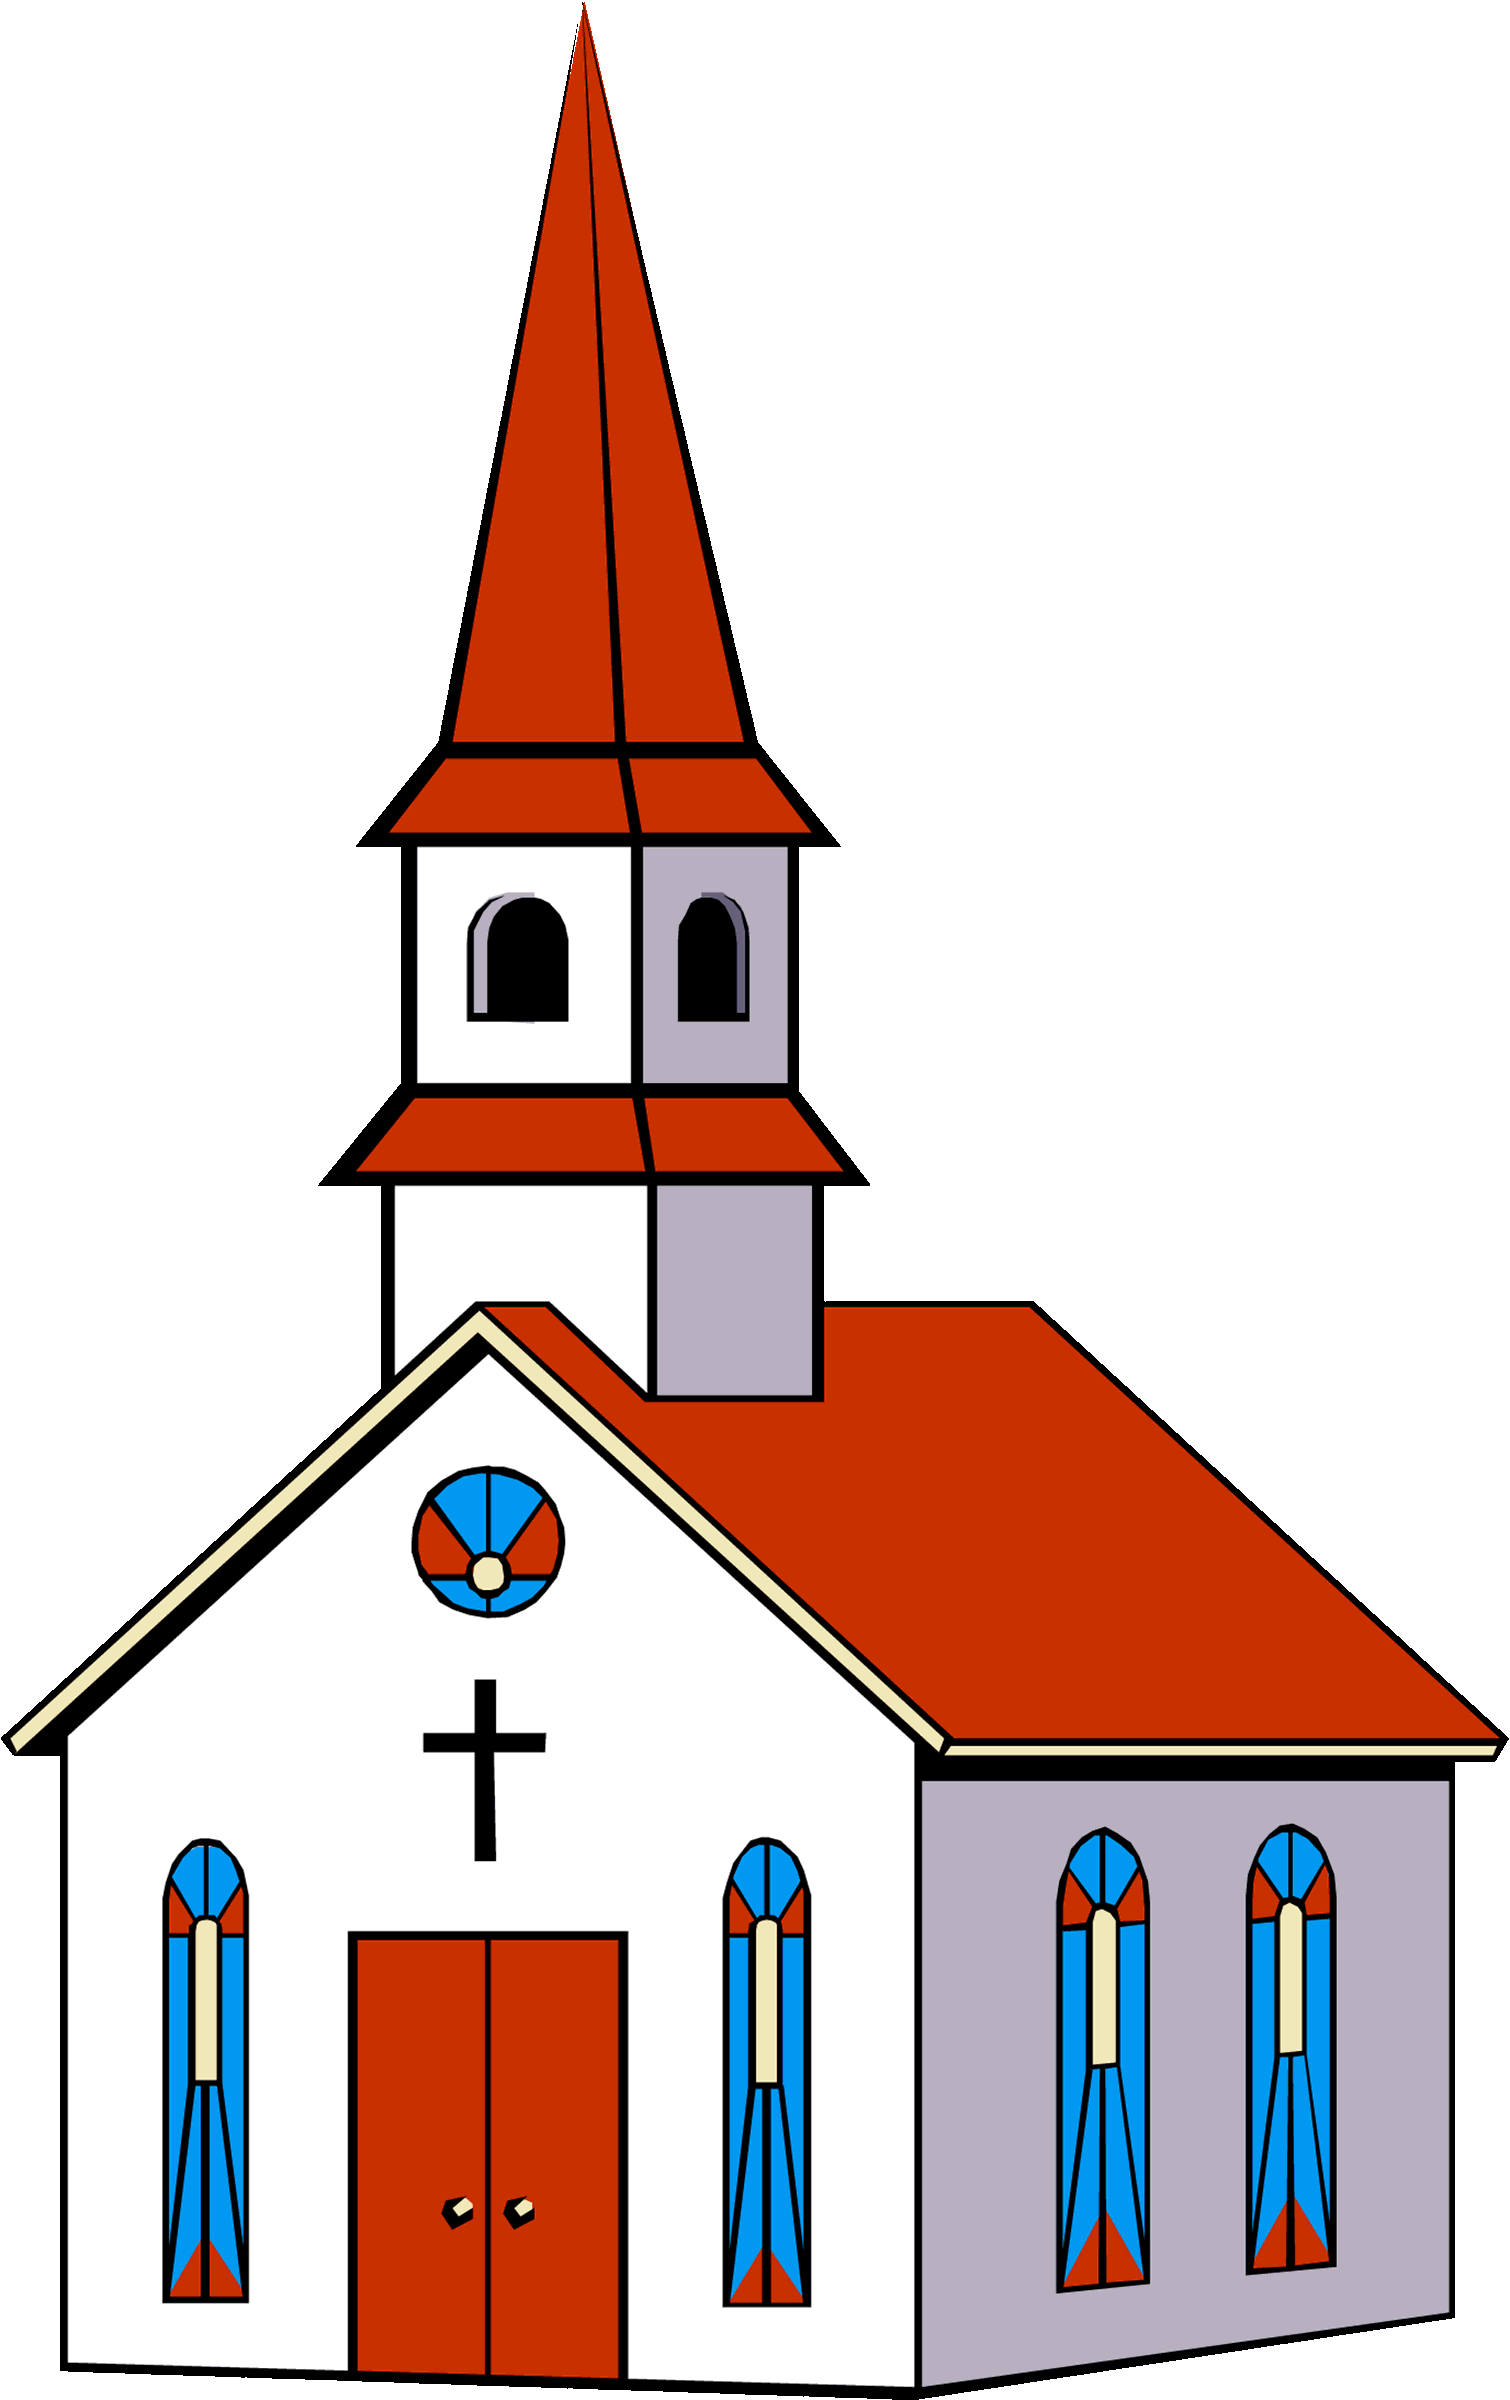 Church Images Clip Art - Clip